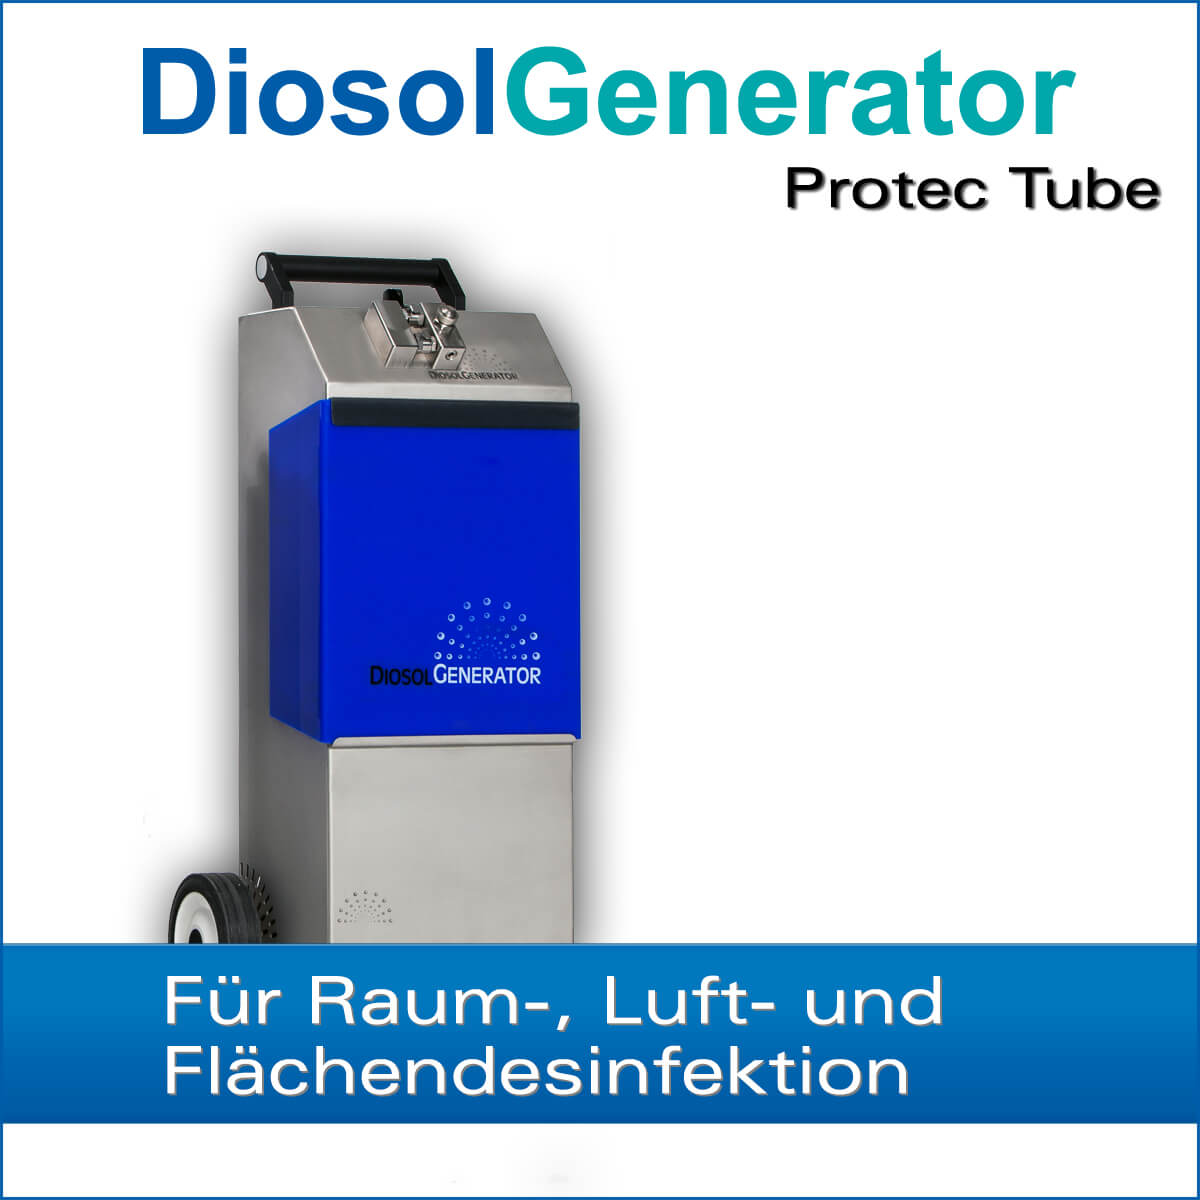 h2o2 verneblungsgerät diosolgenerator protec tube